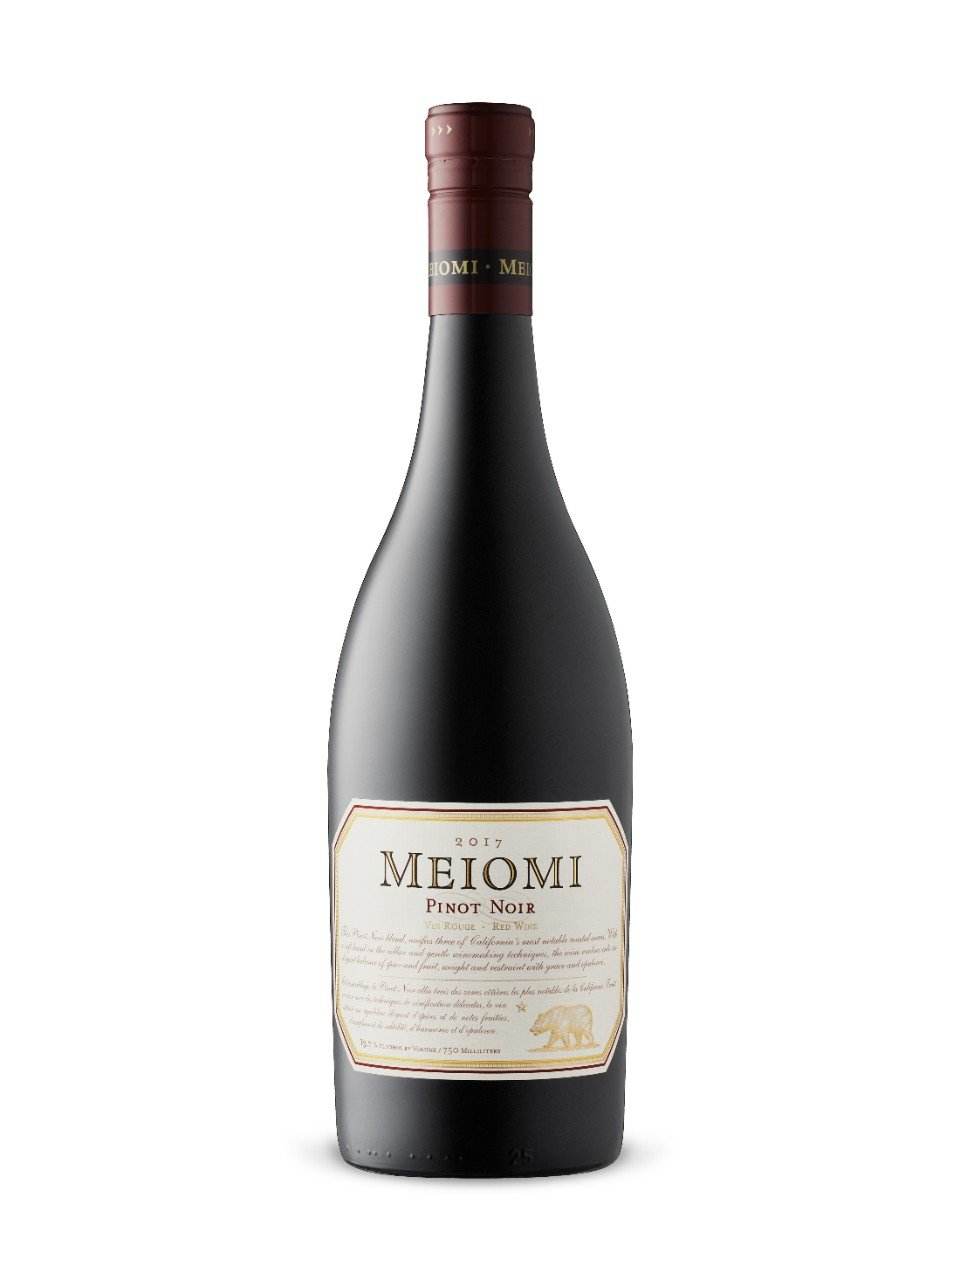 Delicious Meiomi Pinot Noir